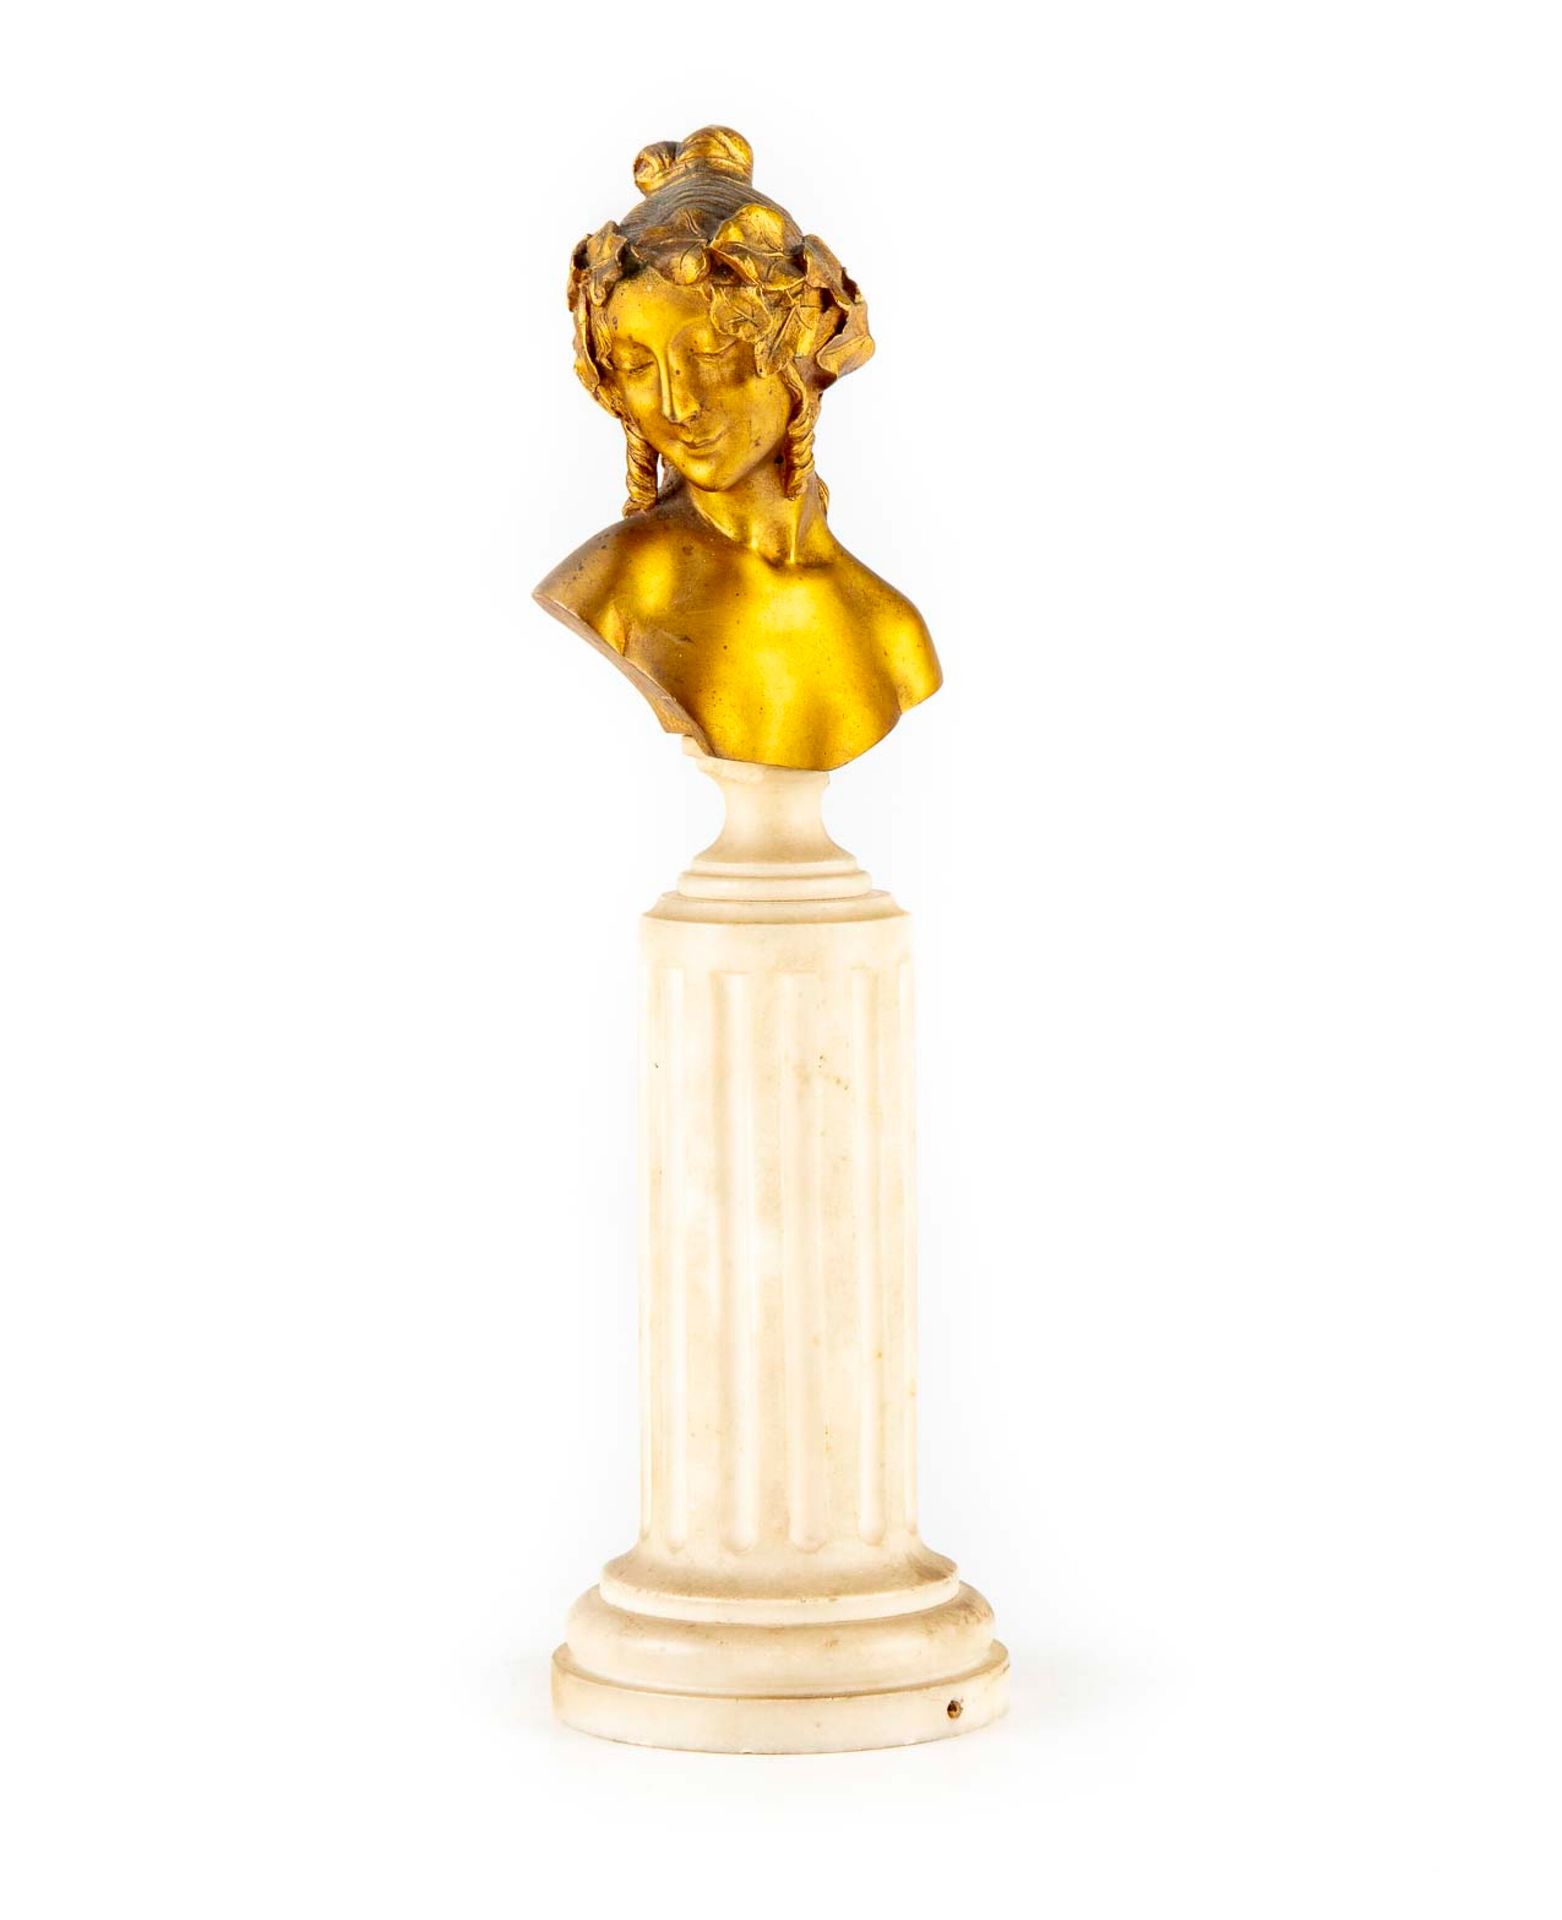 SOSSON 路易斯-索森

镶嵌在大理石柱上的镀金女性半身铜像

约1910年

H.27厘米